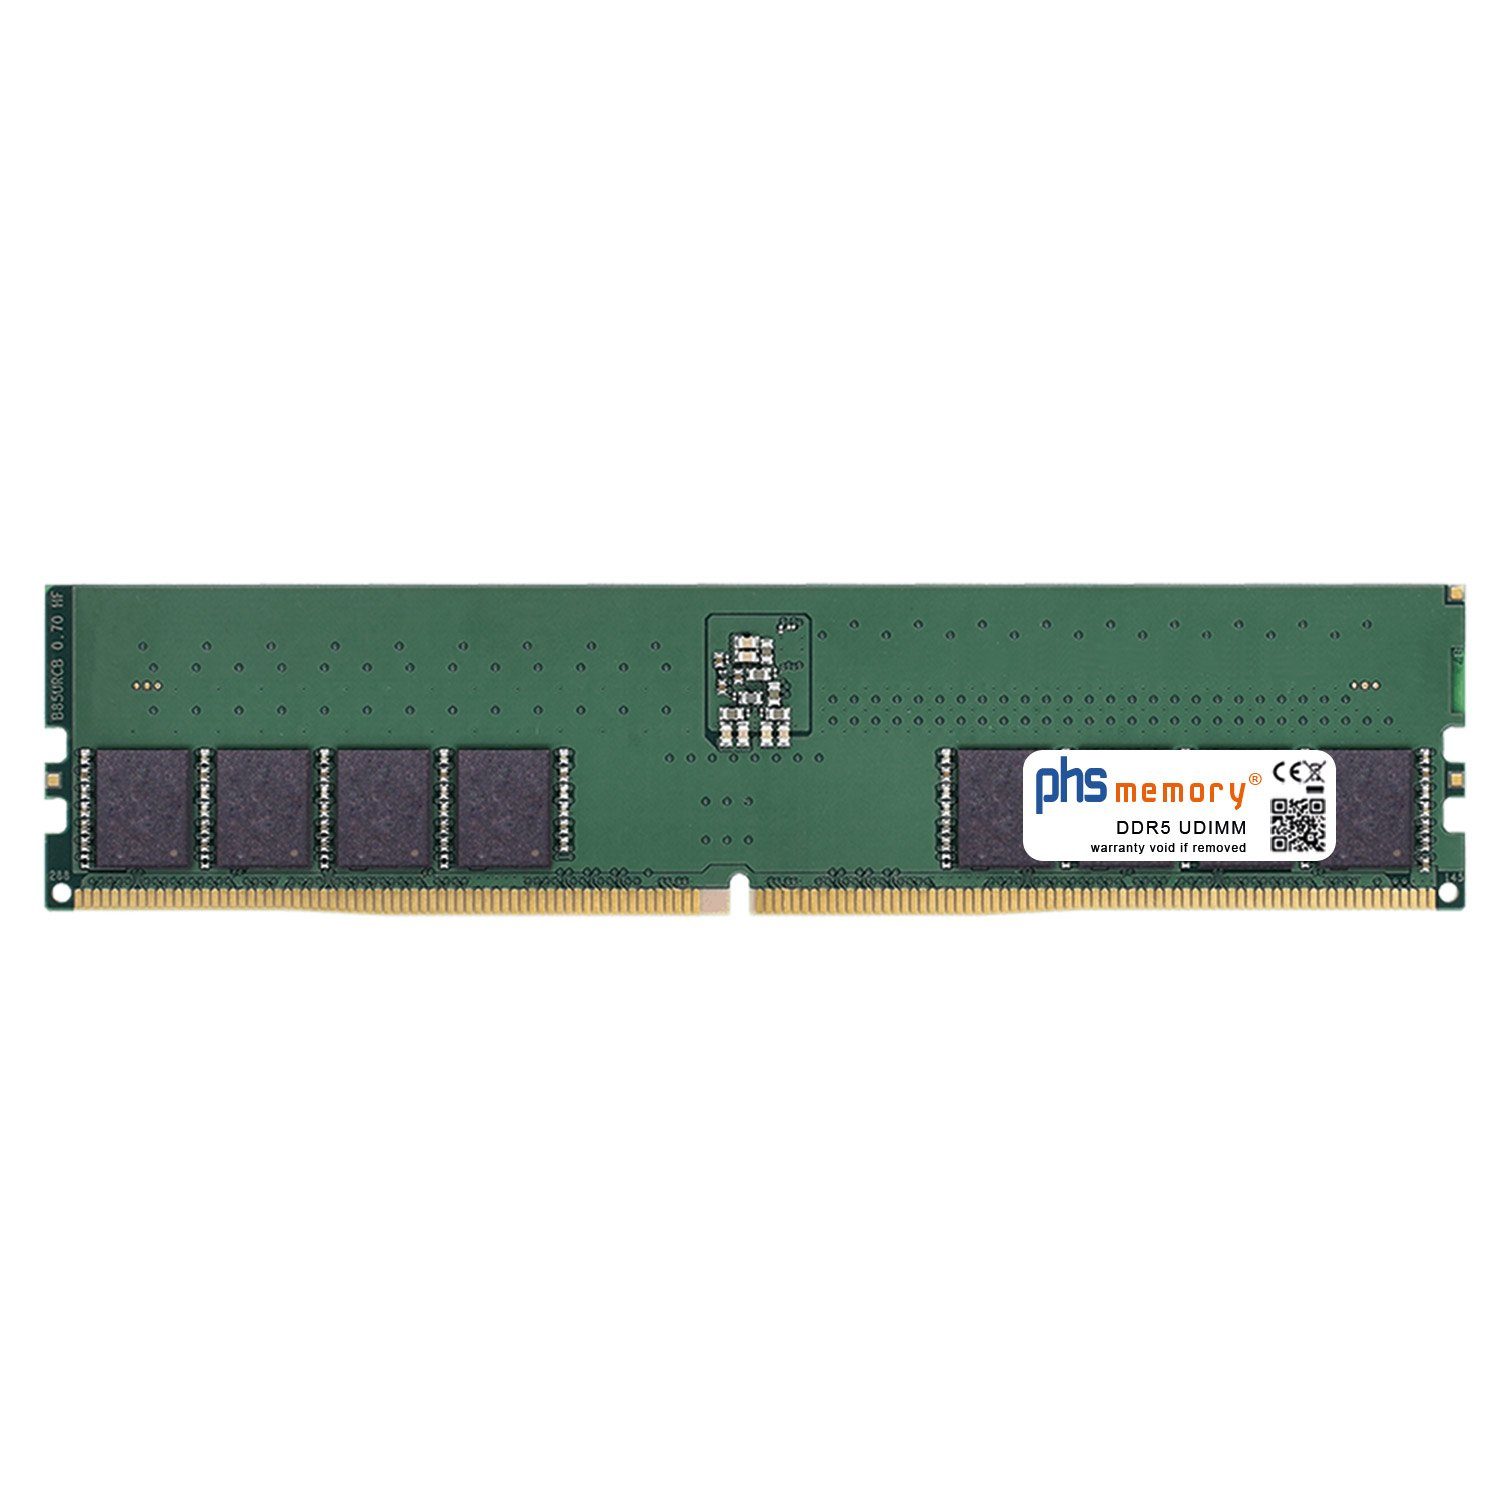 PHS-memory RAM für Captiva Ultimate Gaming I71-178 Arbeitsspeicher